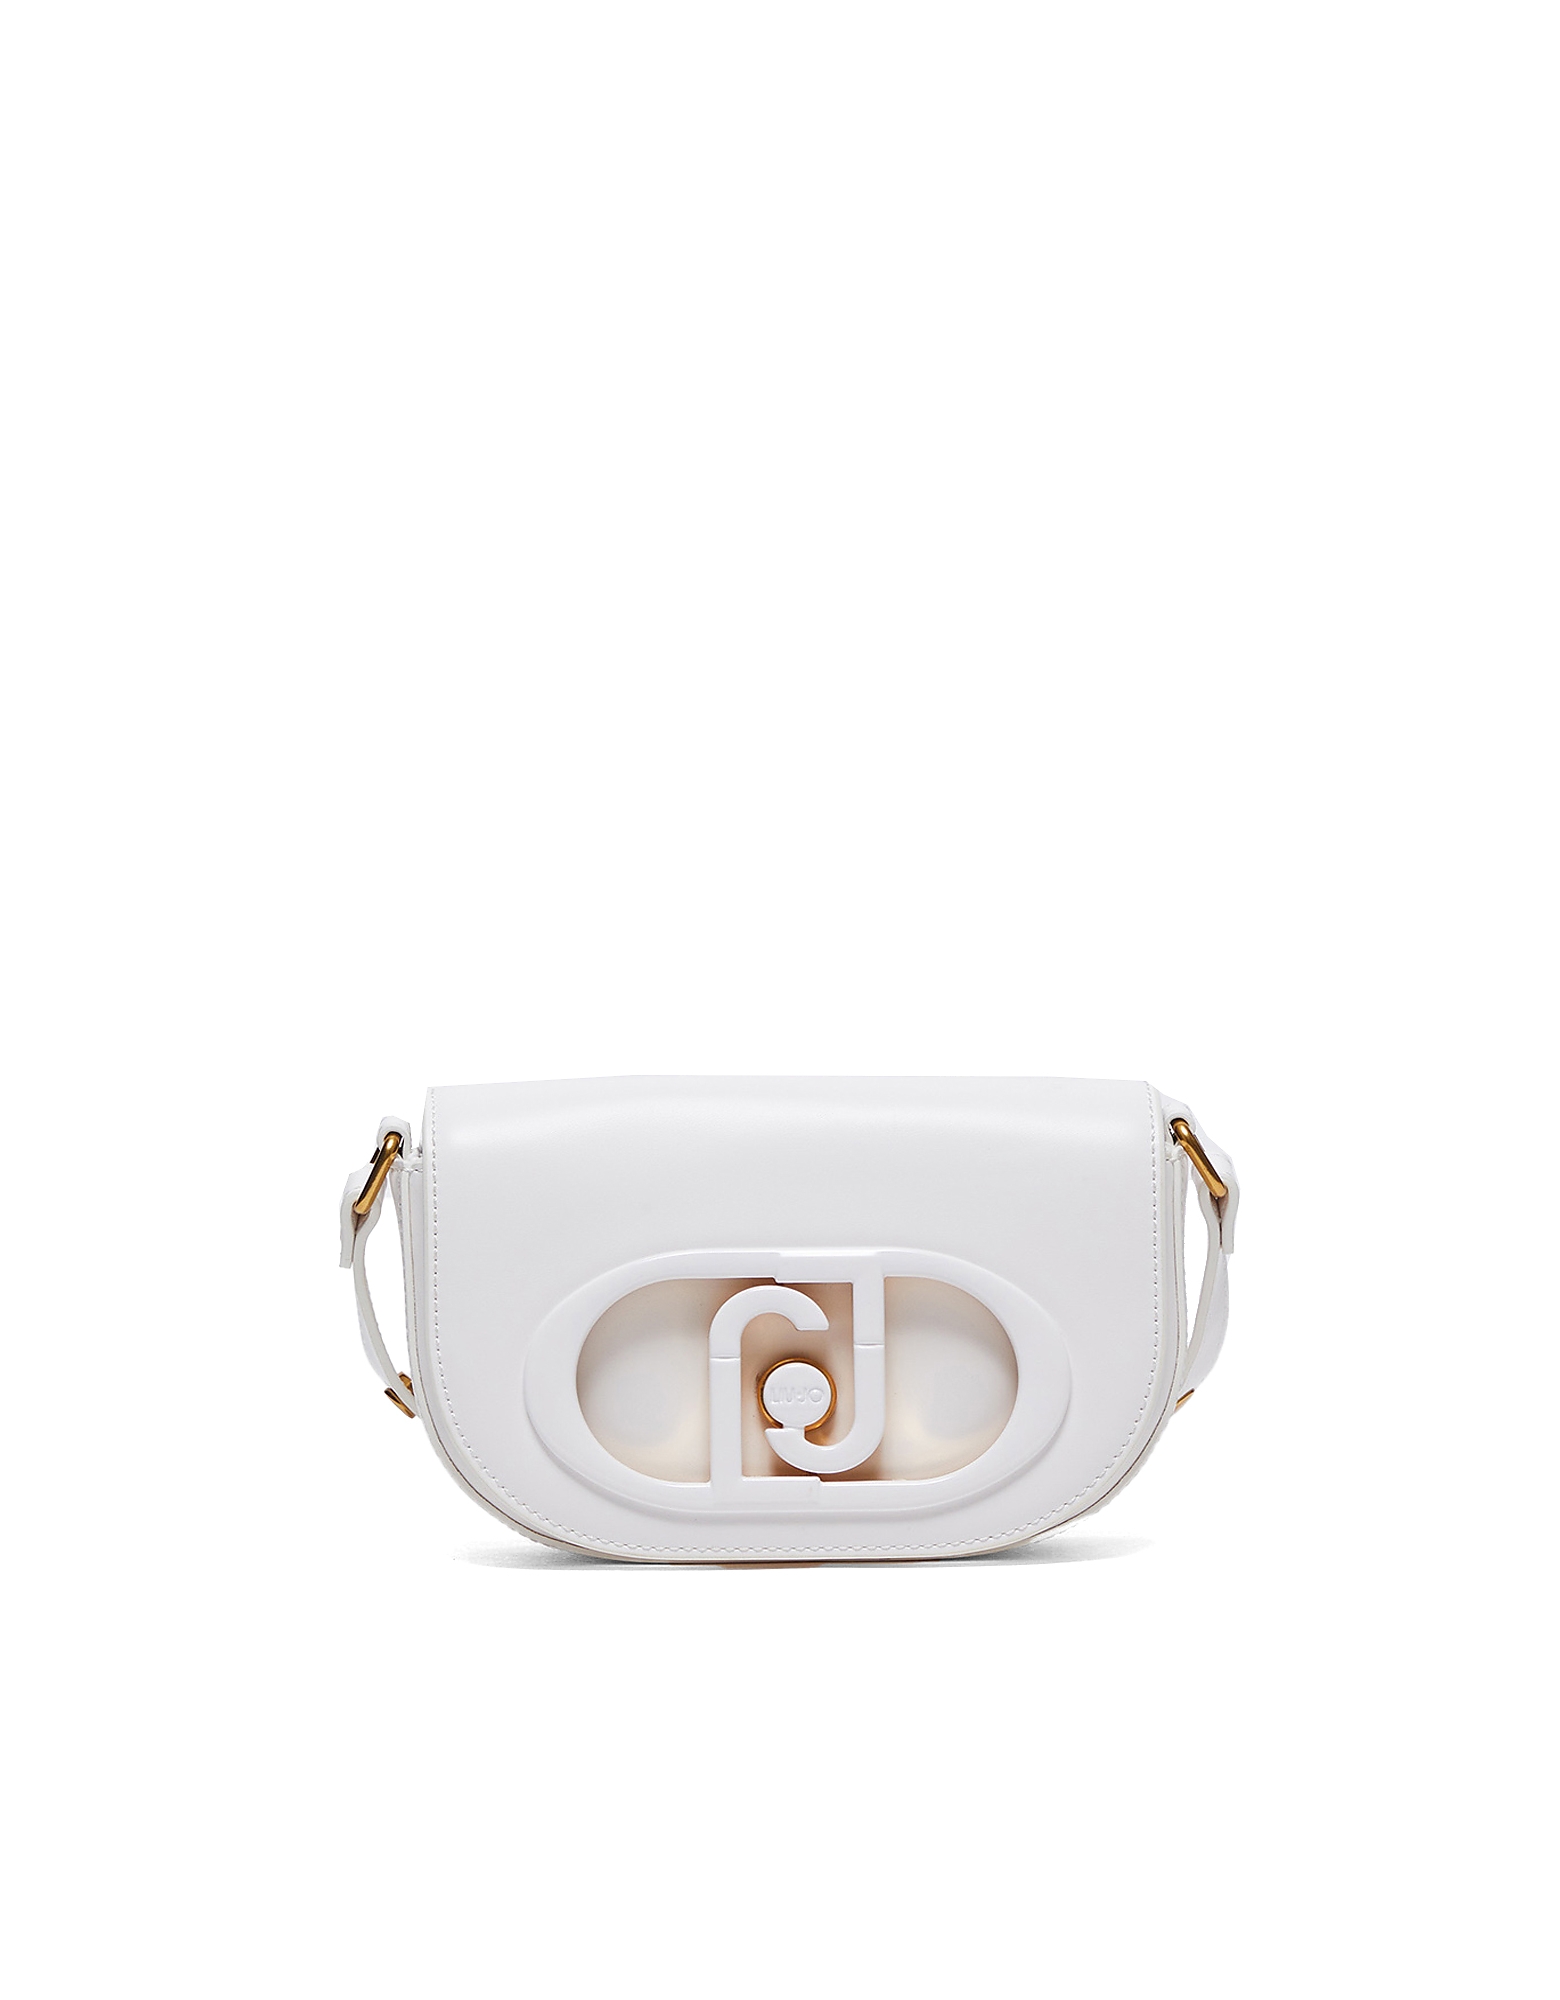 Liu •jo Designer Handbags Women's White Bag